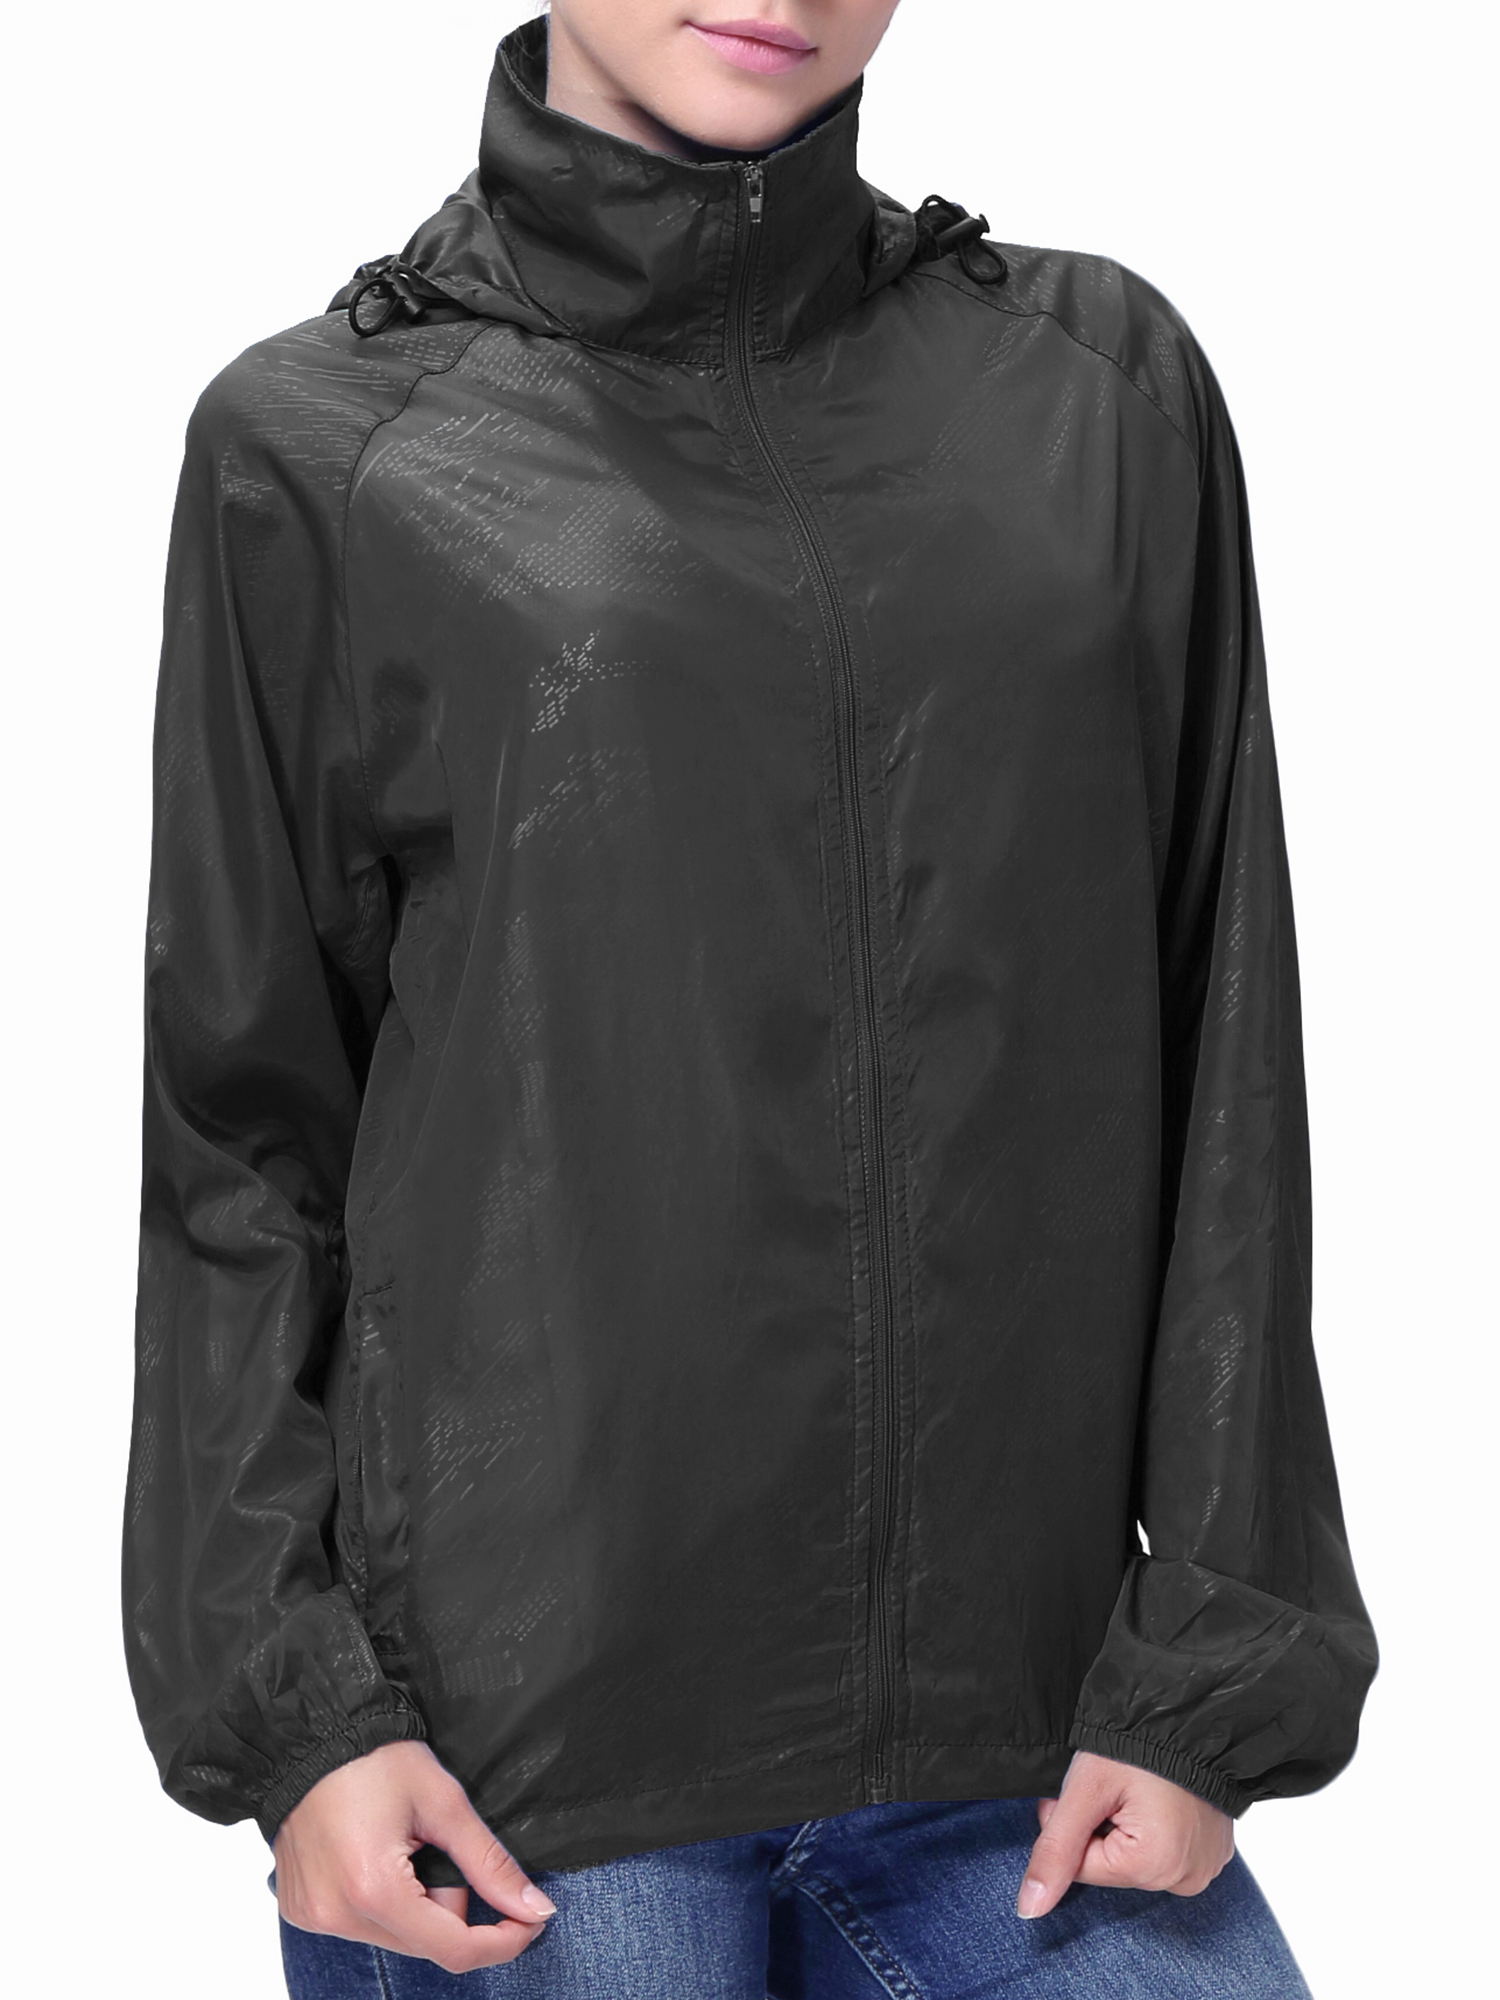 FOCUSSEXY Women's Hooded Rain Jacket Waterproof Windbreaker Hooded Rain Outdoor Poncho Running Jackets Womens Raincoat Packable Hooded Shirt Quick Dry - image 4 of 8